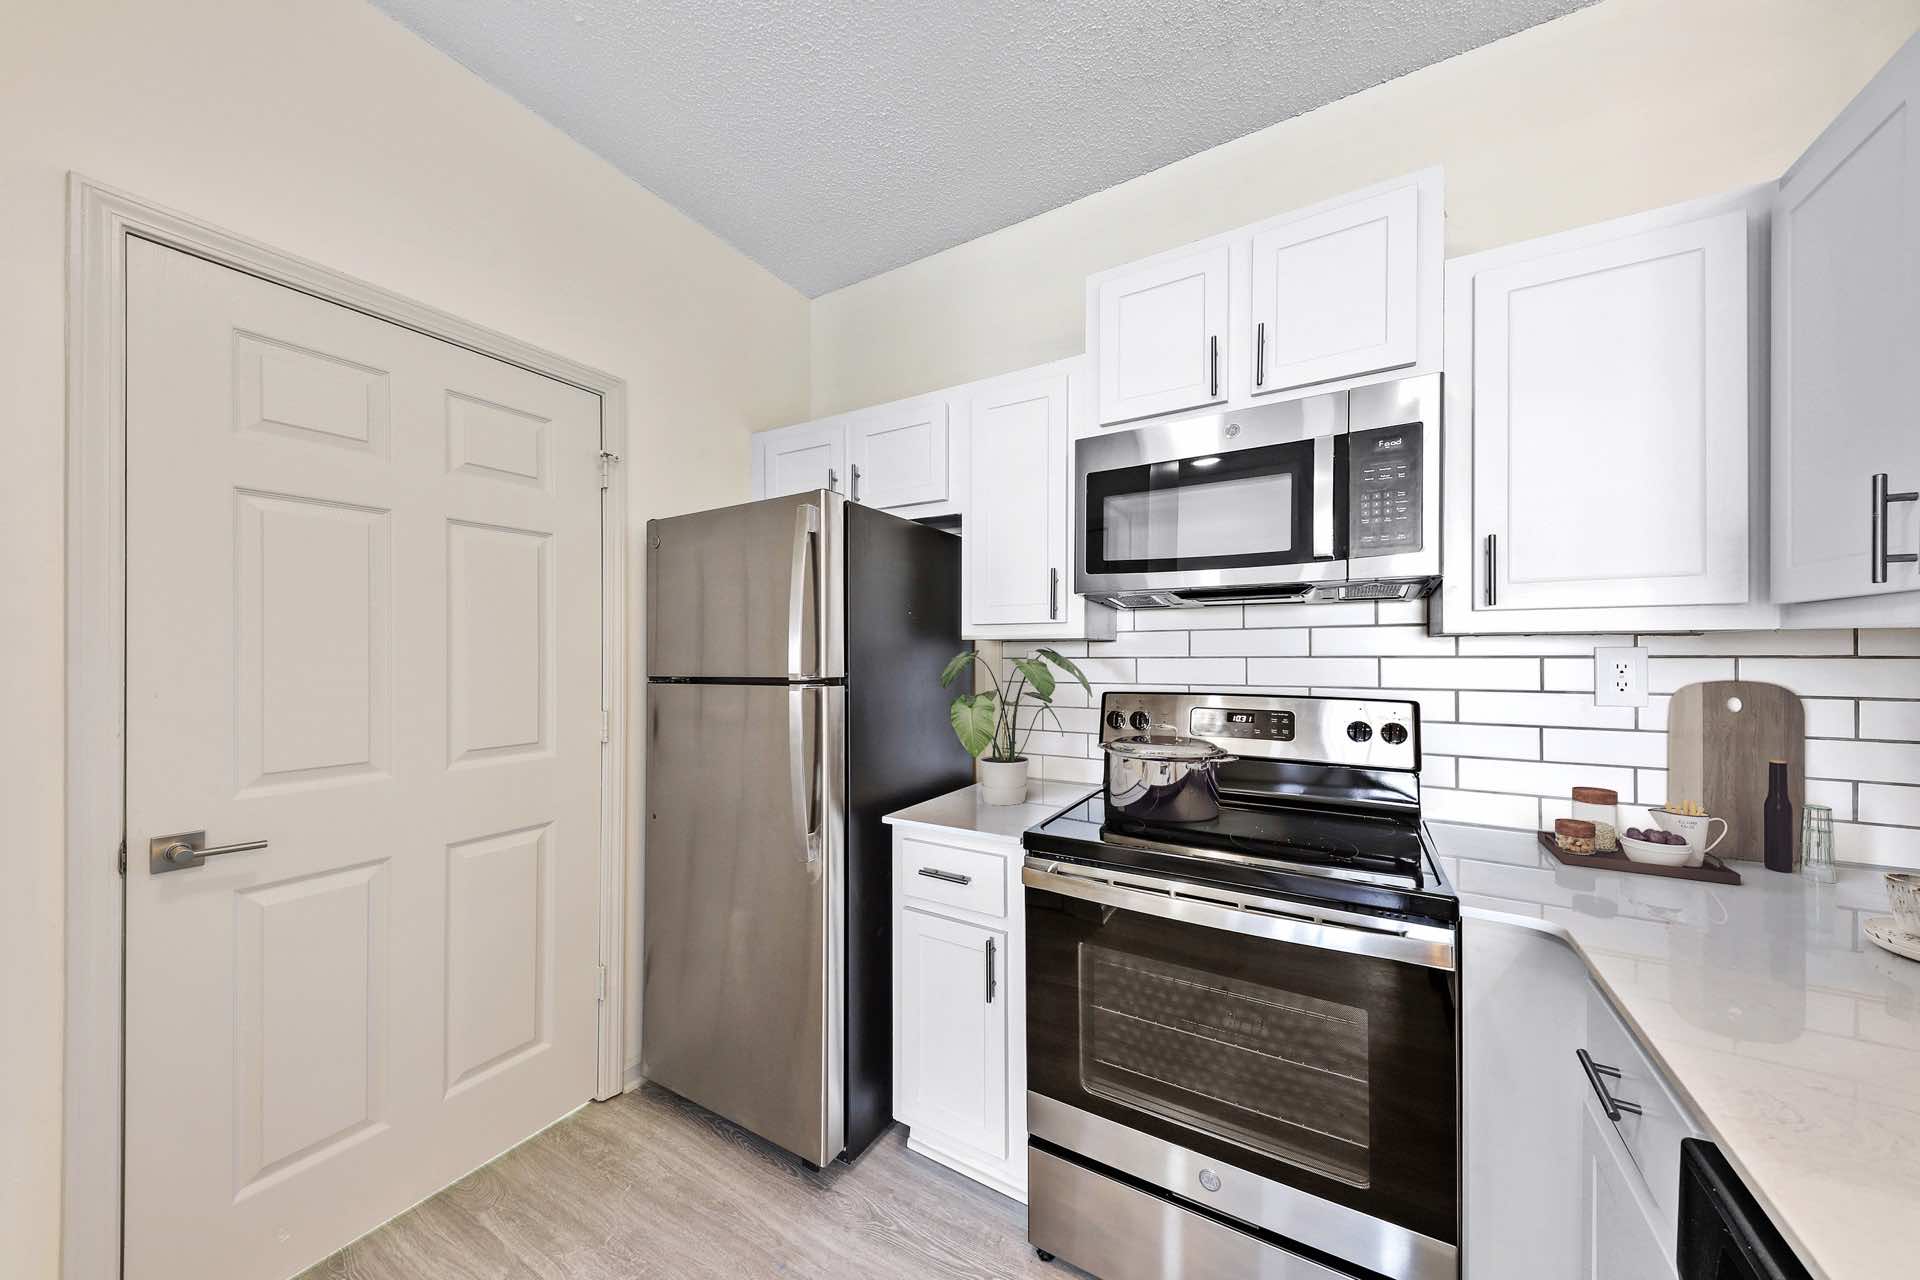 kitchen with white shaker cabinets and tile backsplash